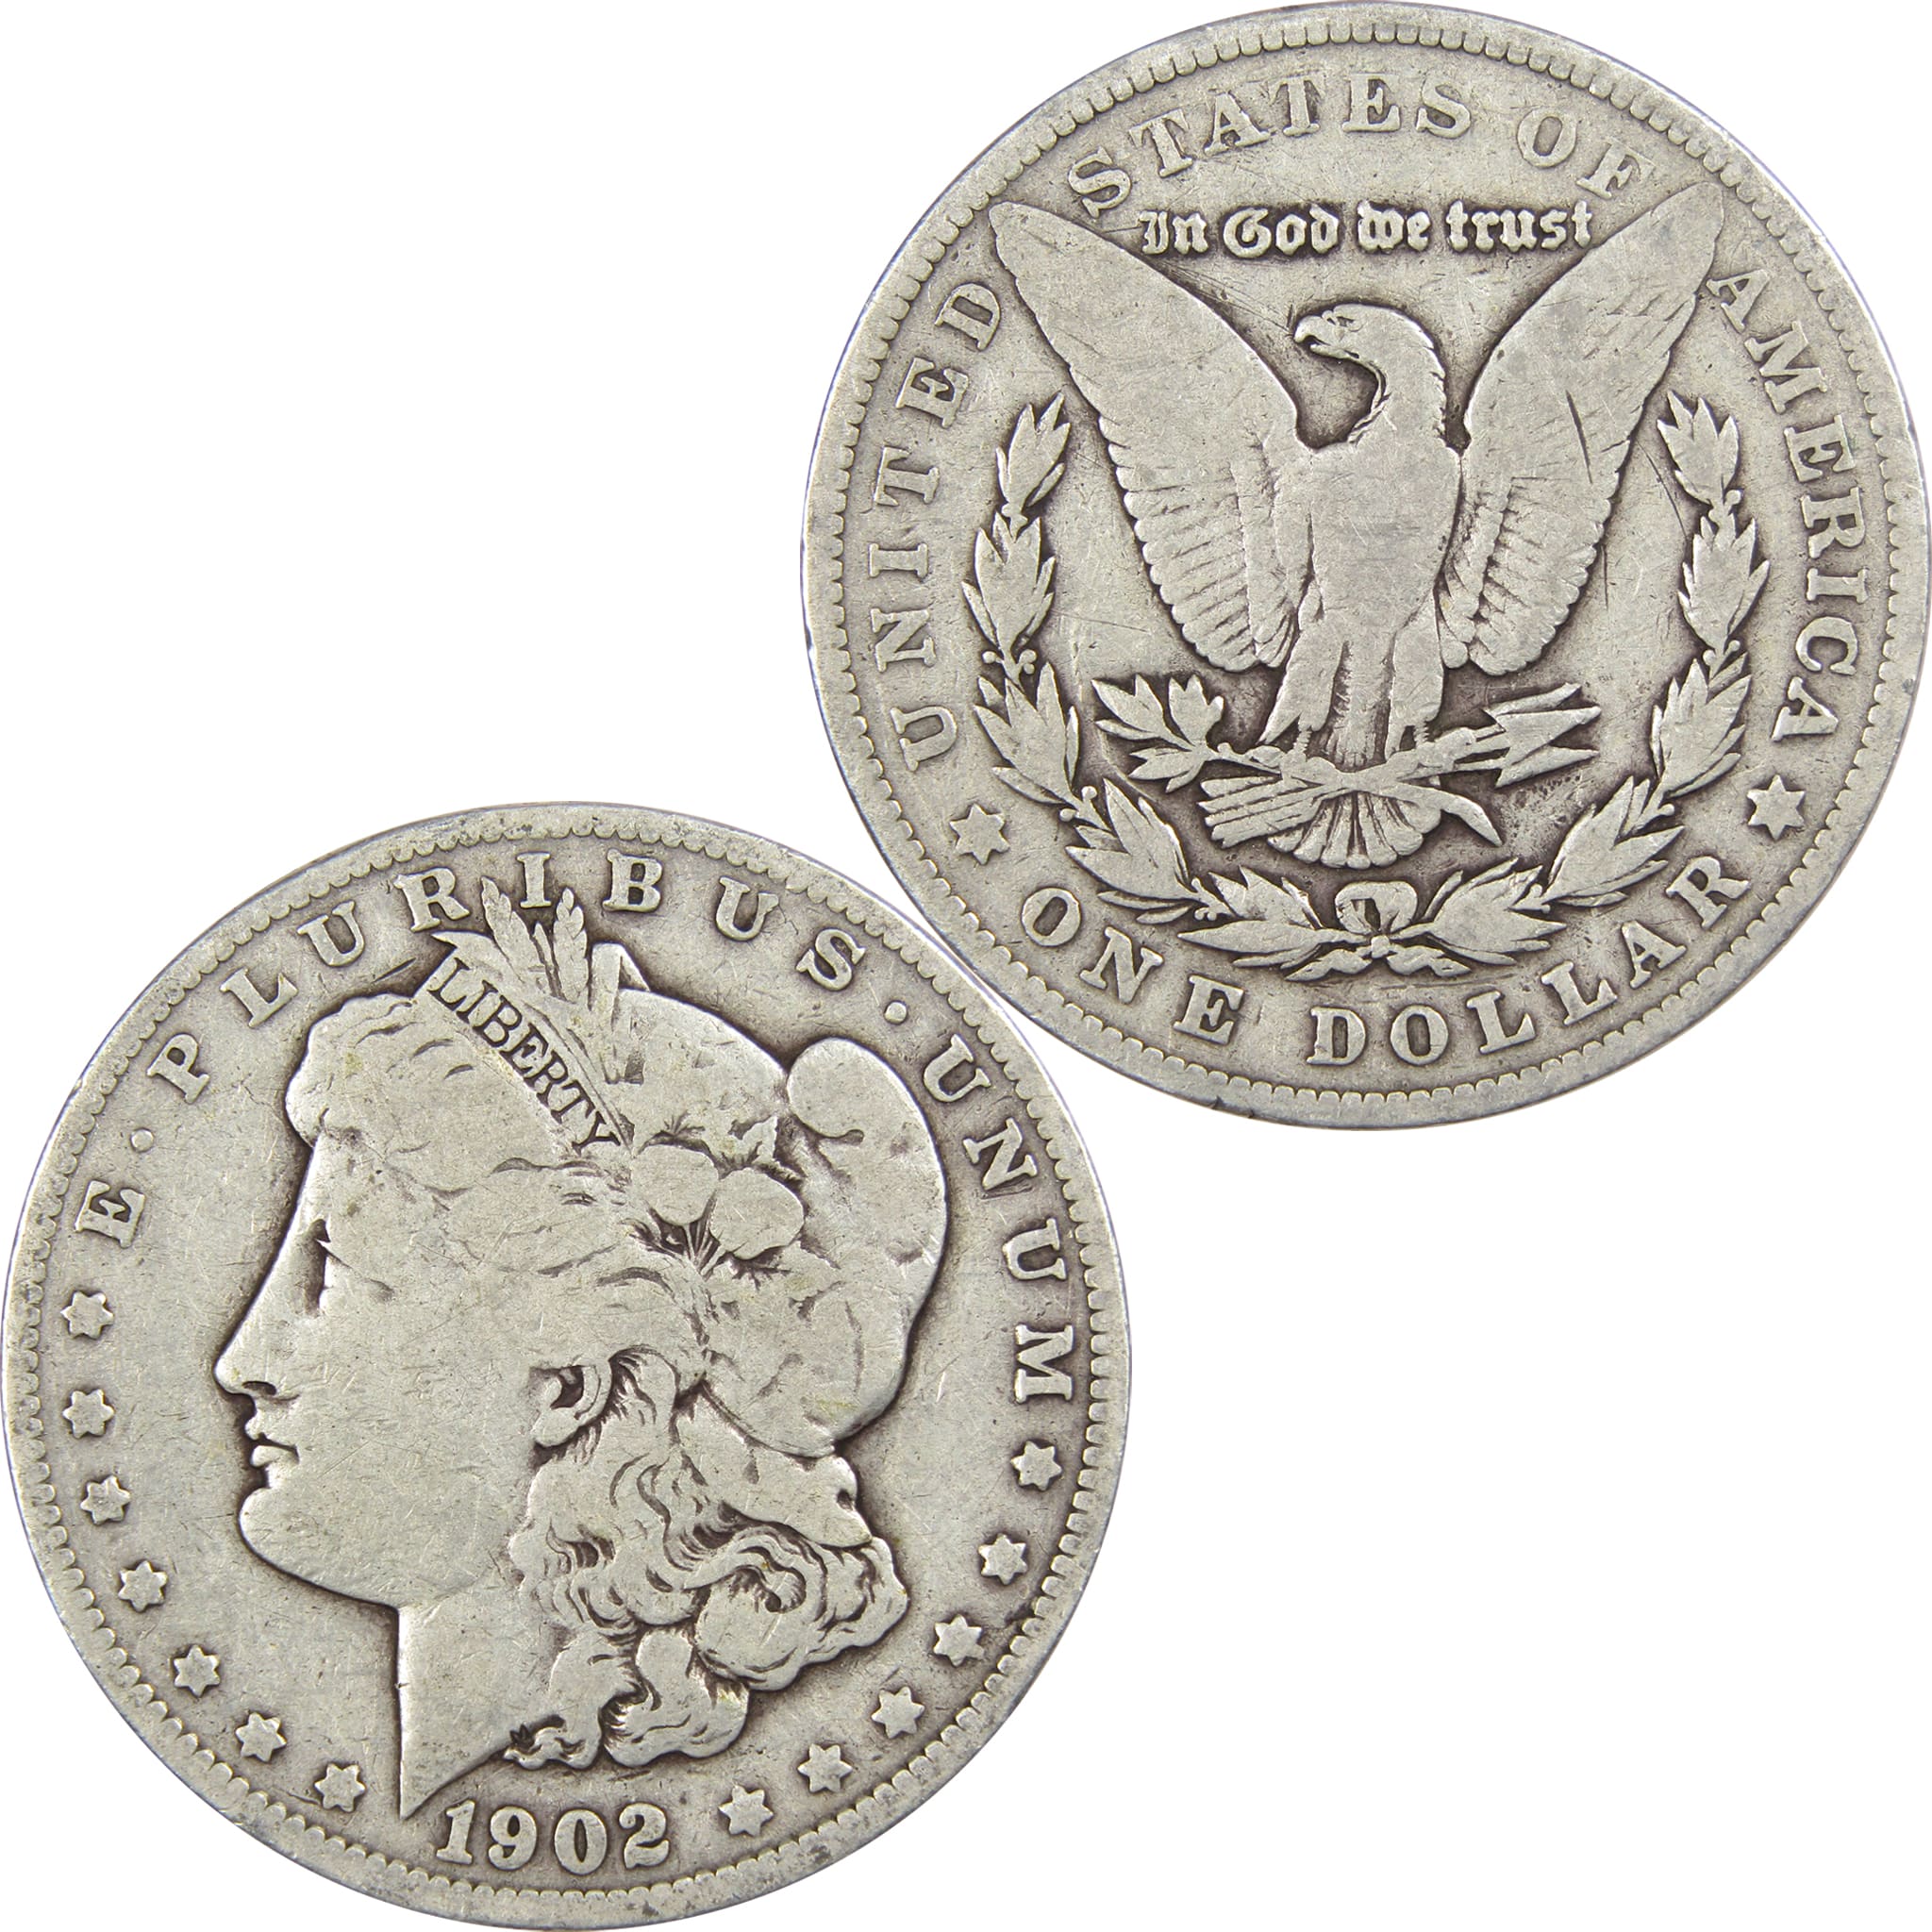 1902 Morgan Dollar VG Very Good 90% Silver US Coin SKU:IPC7434 - Morgan coin - Morgan silver dollar - Morgan silver dollar for sale - Profile Coins &amp; Collectibles